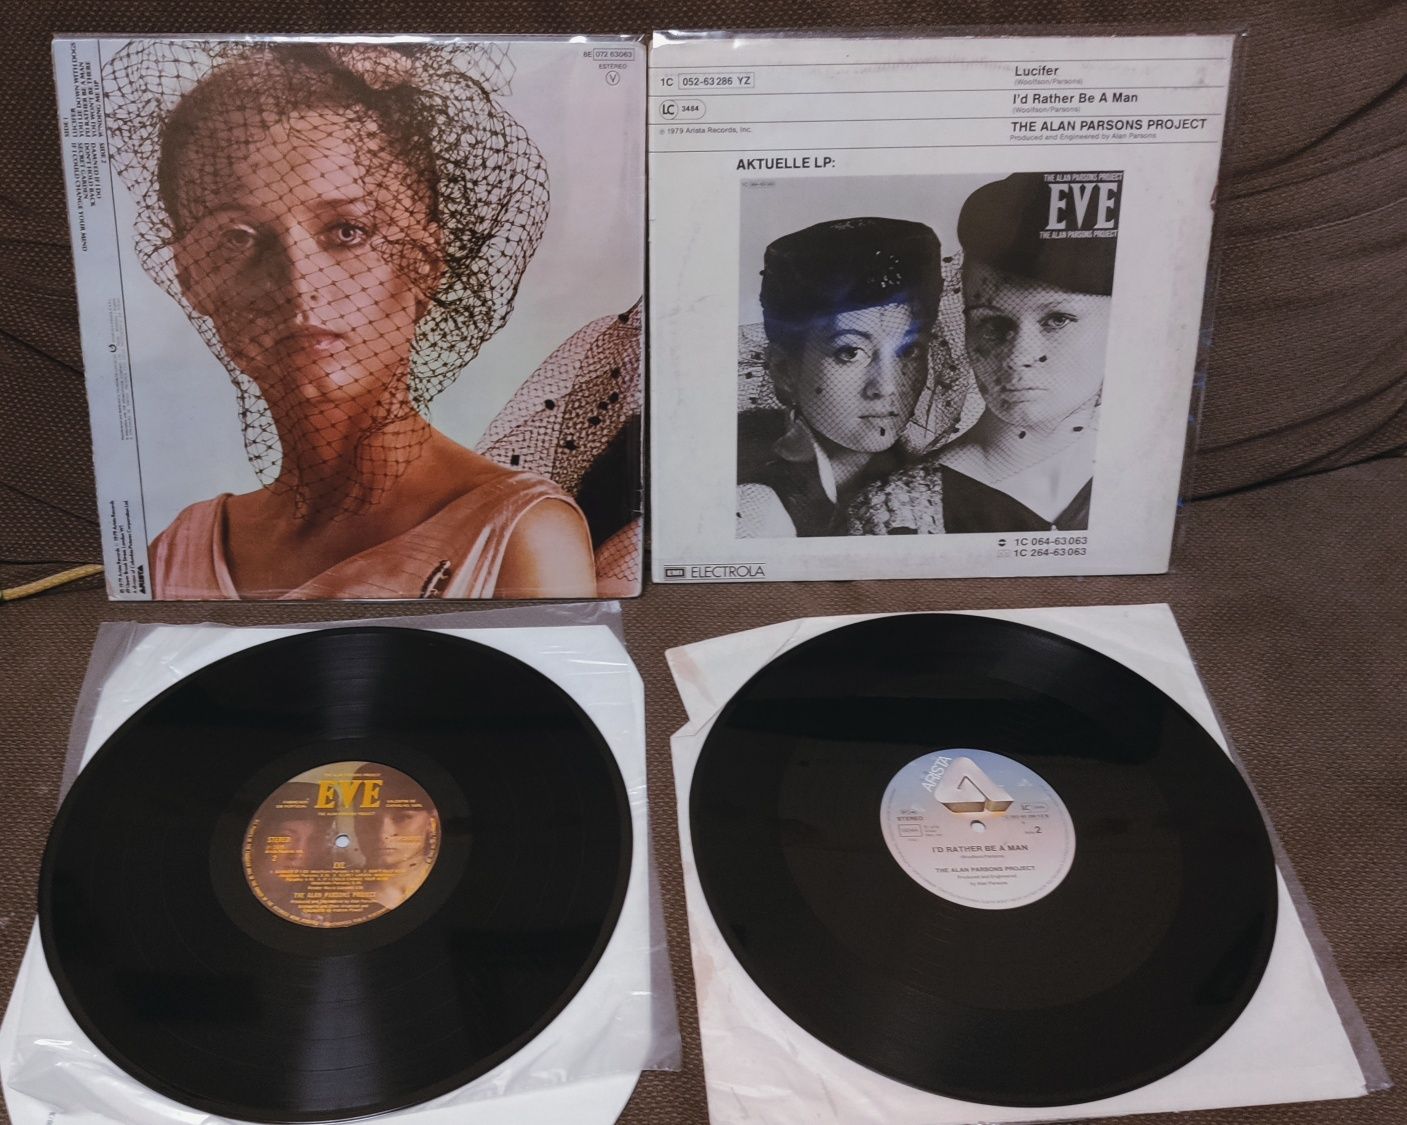 The Alan Parsons project 2 пластинки, альбом Eve  и maxi single